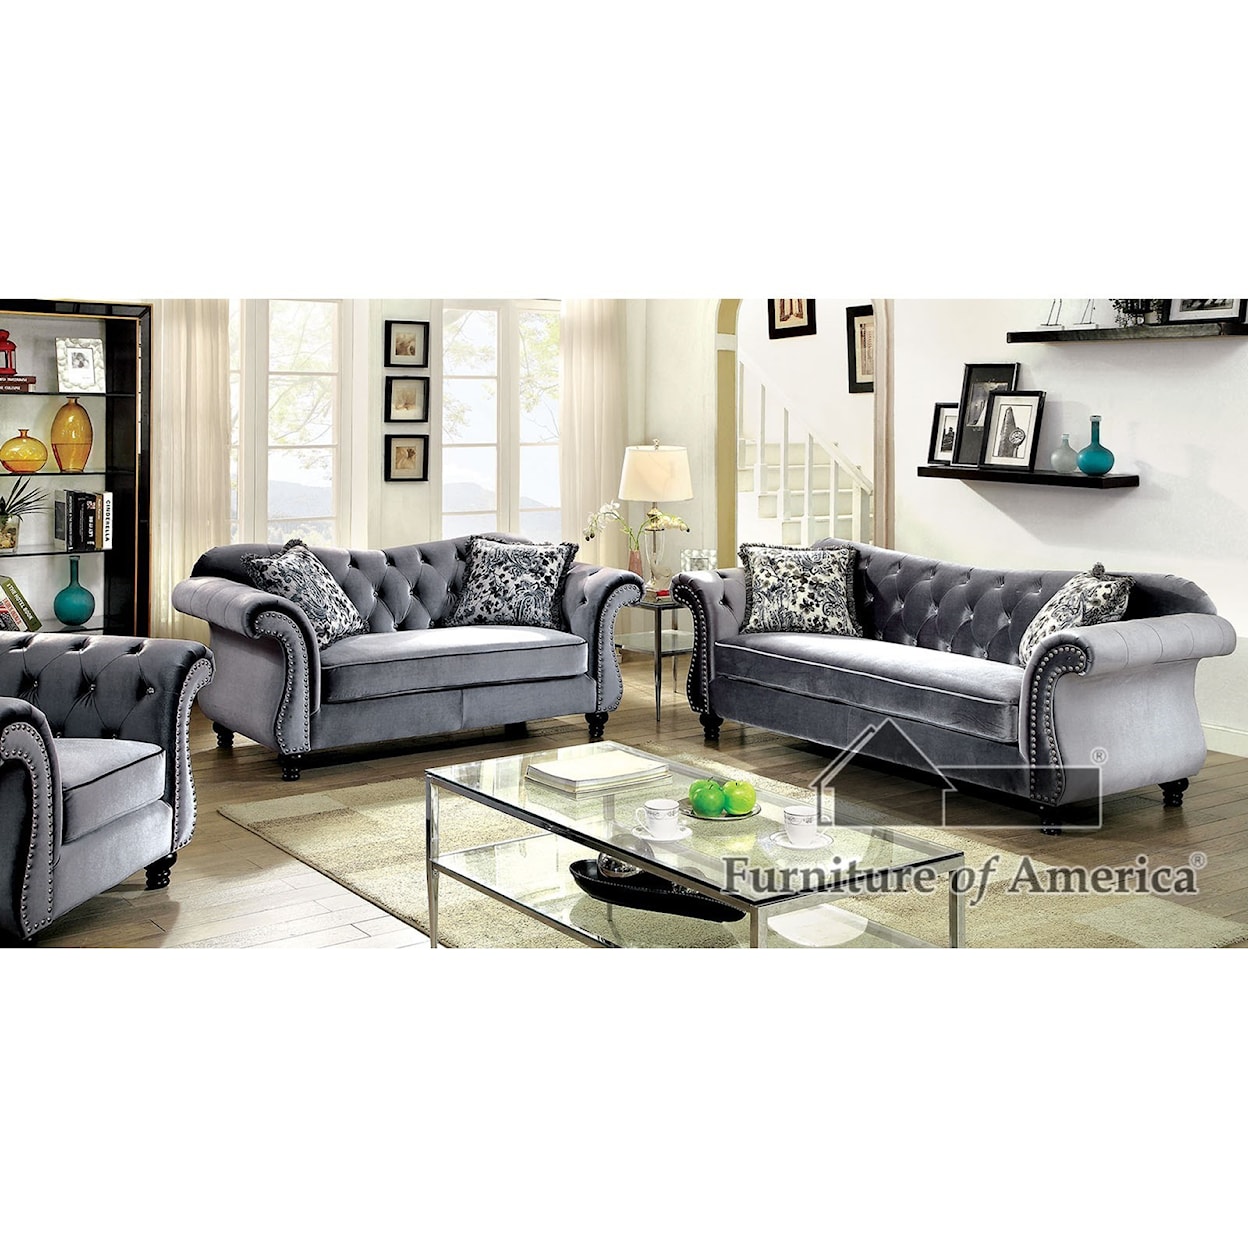 Furniture of America Jolanda Stationary Living Room Group